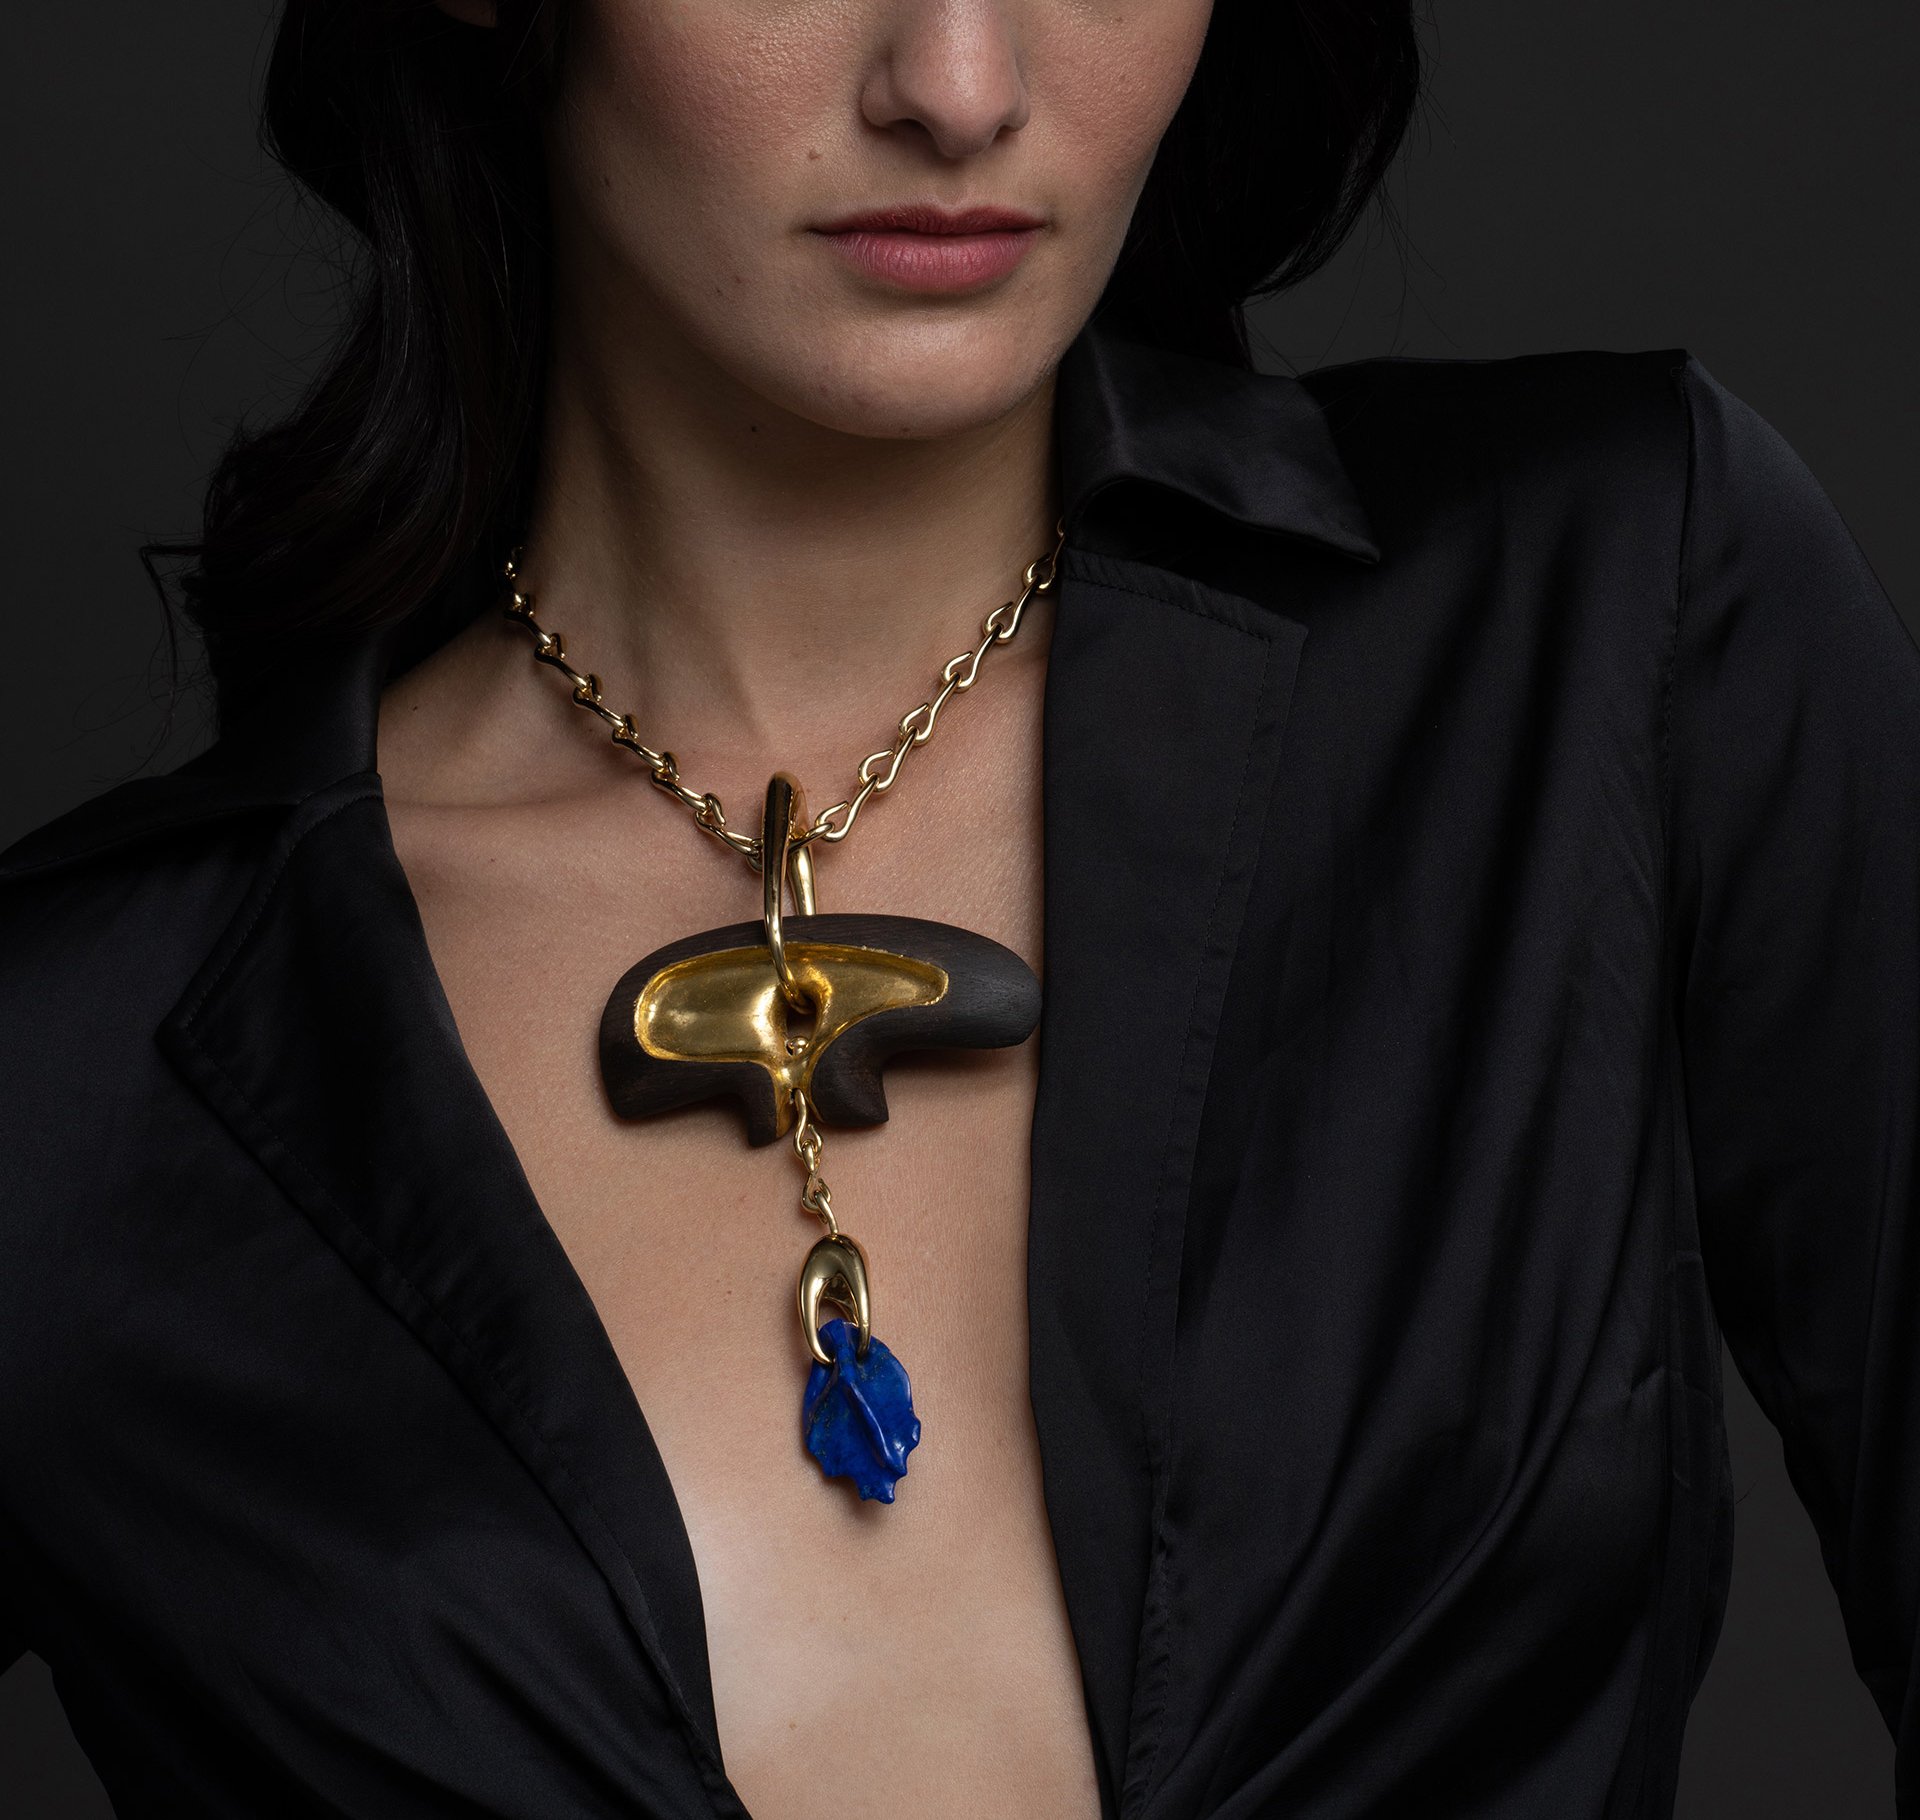 OJO-egypt-necklaces-collection-julio-martinez-barnetche-marion-friedmann-gallery-LR-egypt308-cut.jpg